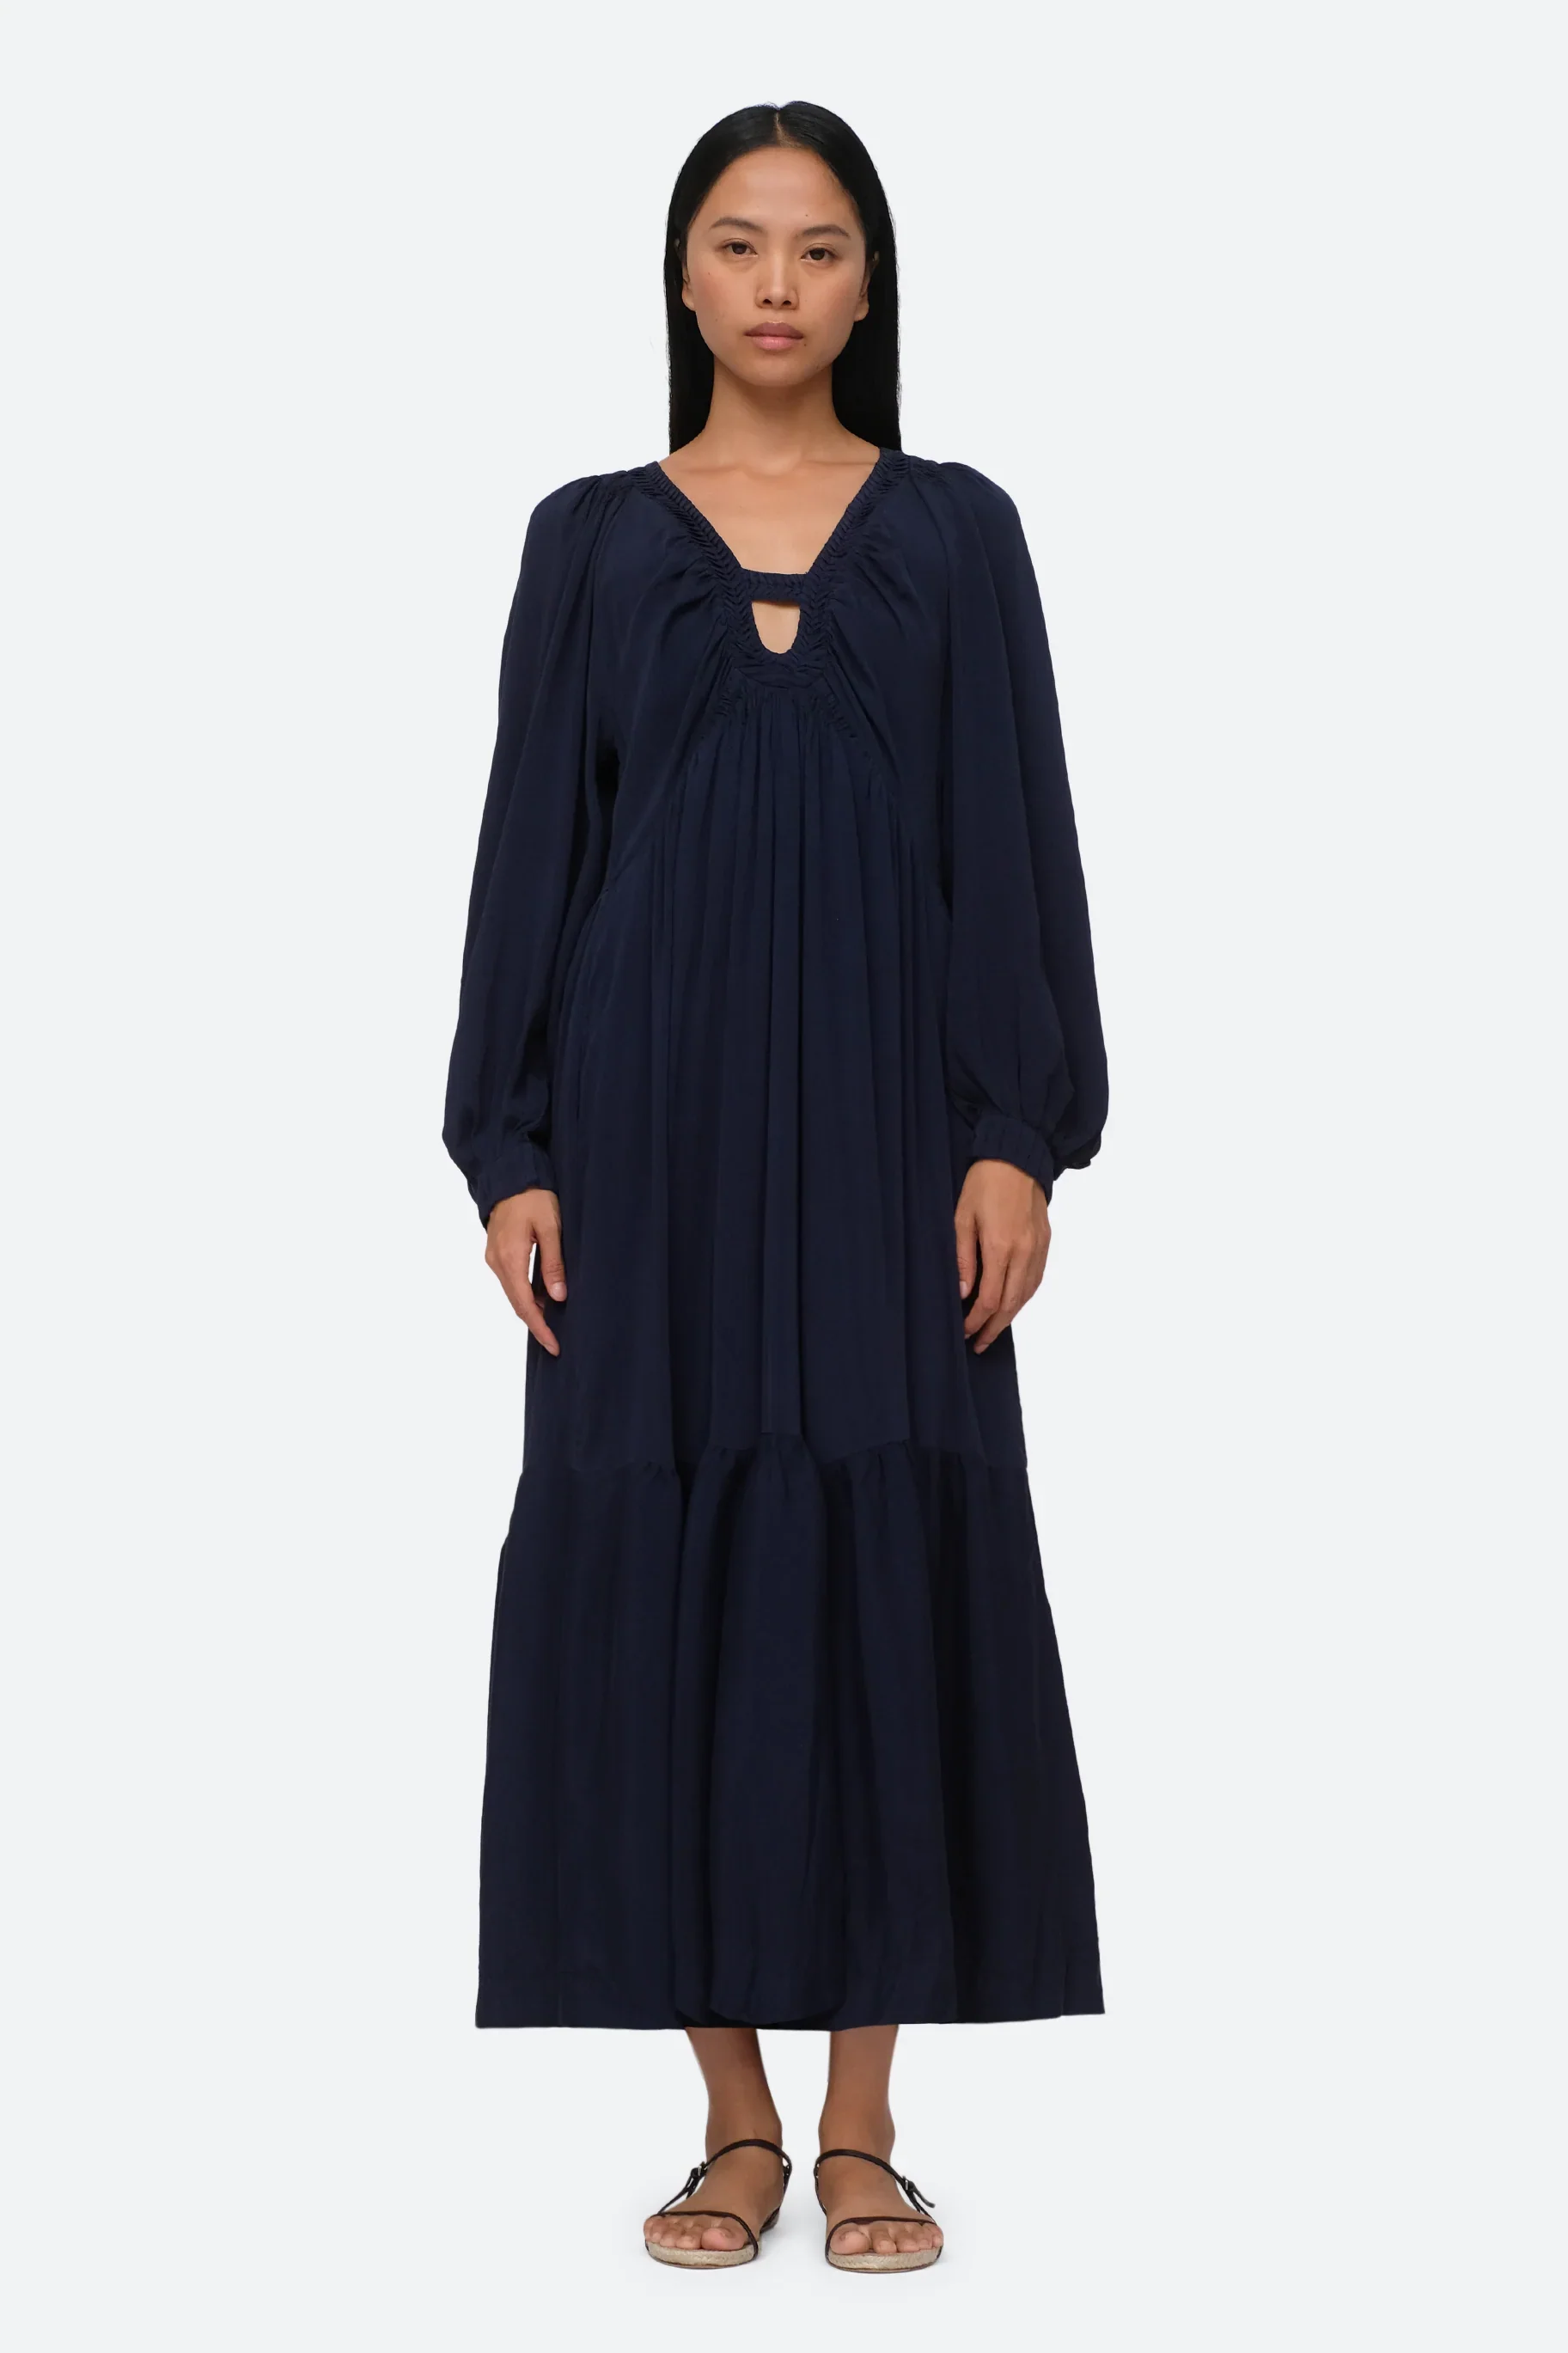 Product Image for Nyla Dress, Navy